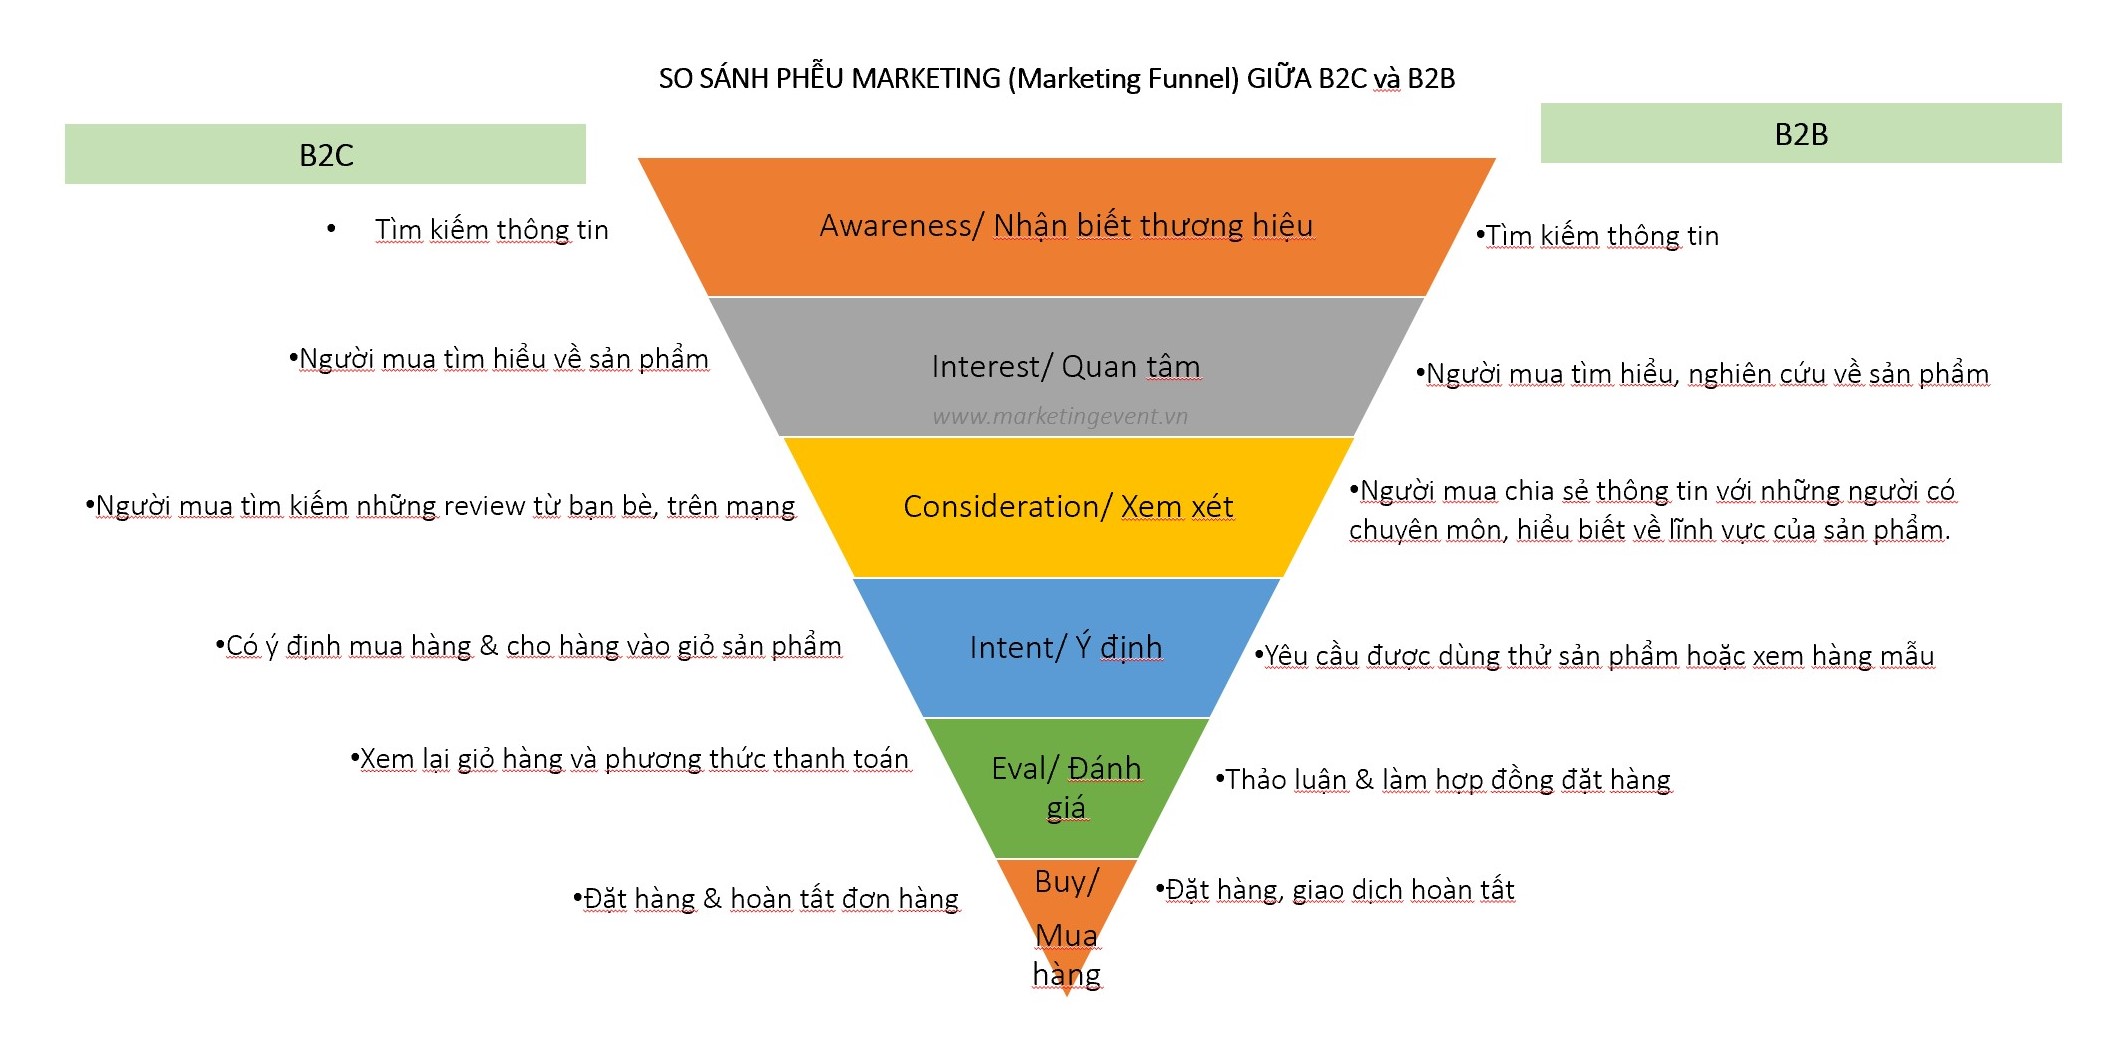 MarketingEventPhoenix so sanh pheu marketing B2B va B2C